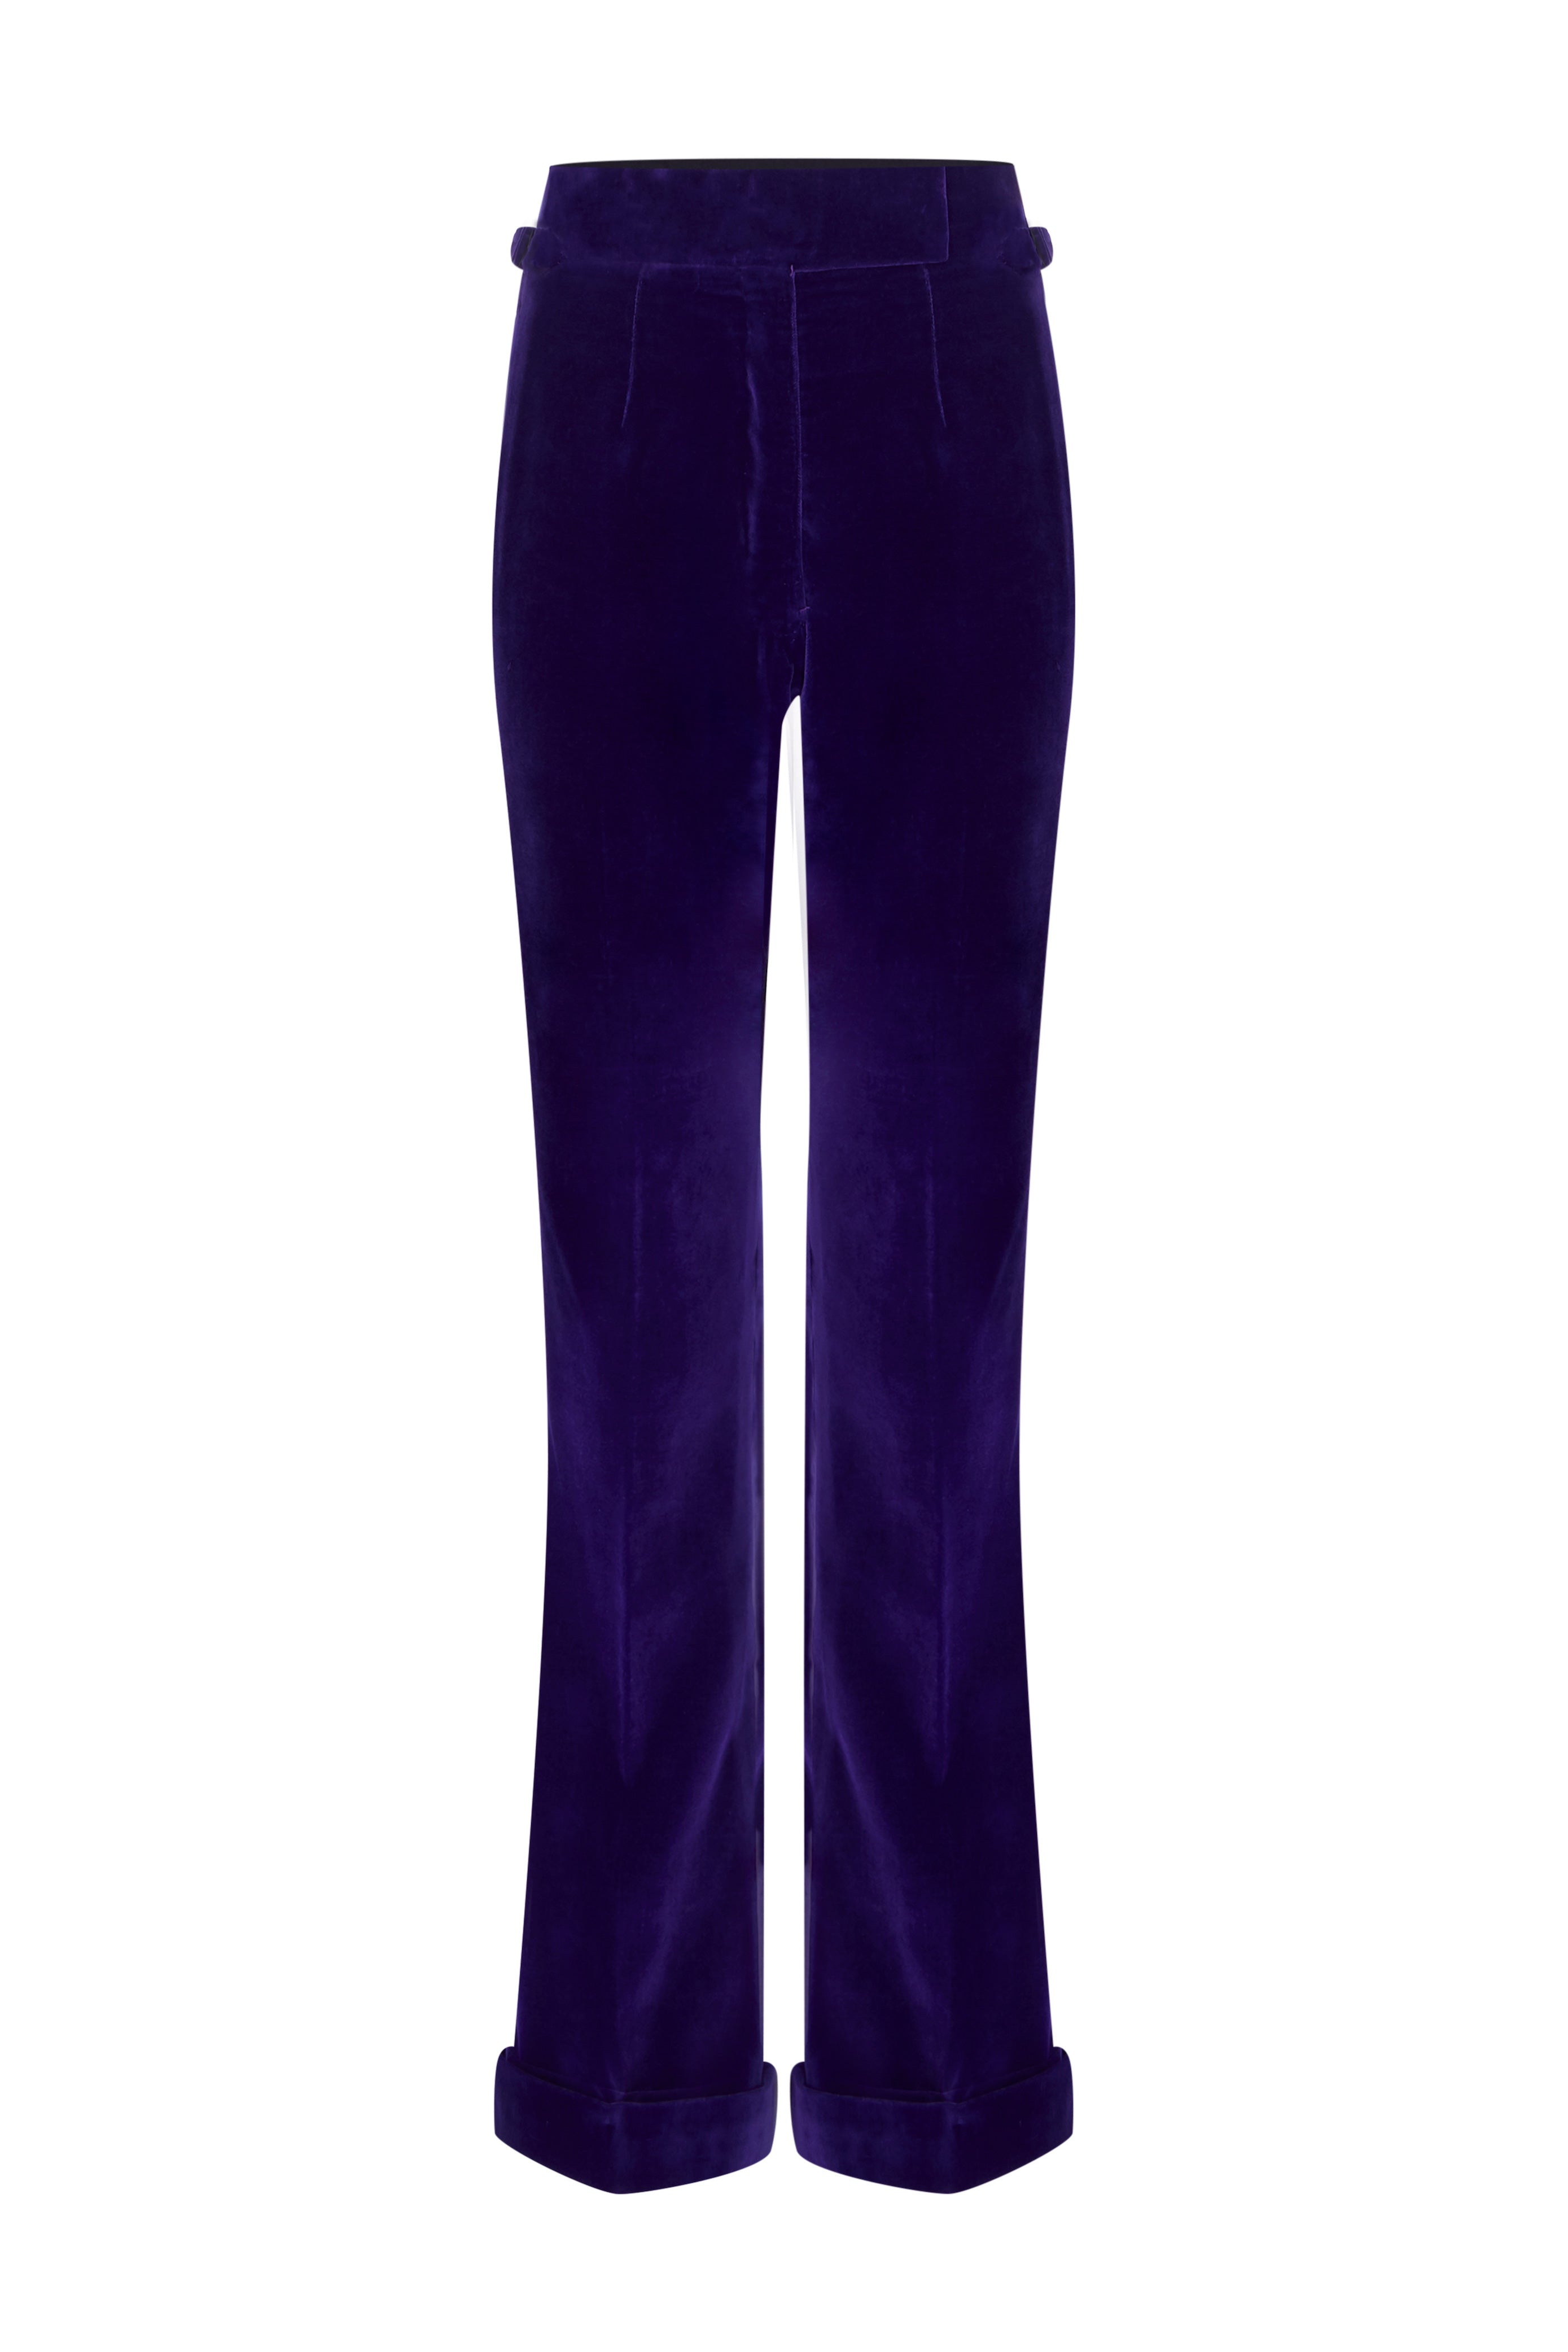 Clearance RYRJJ Women's Velvet Yoga Pants Elegant High Waist Palazzo Lounge  Pants Wide Leg Work Pants(Purple,XXL) - Walmart.com